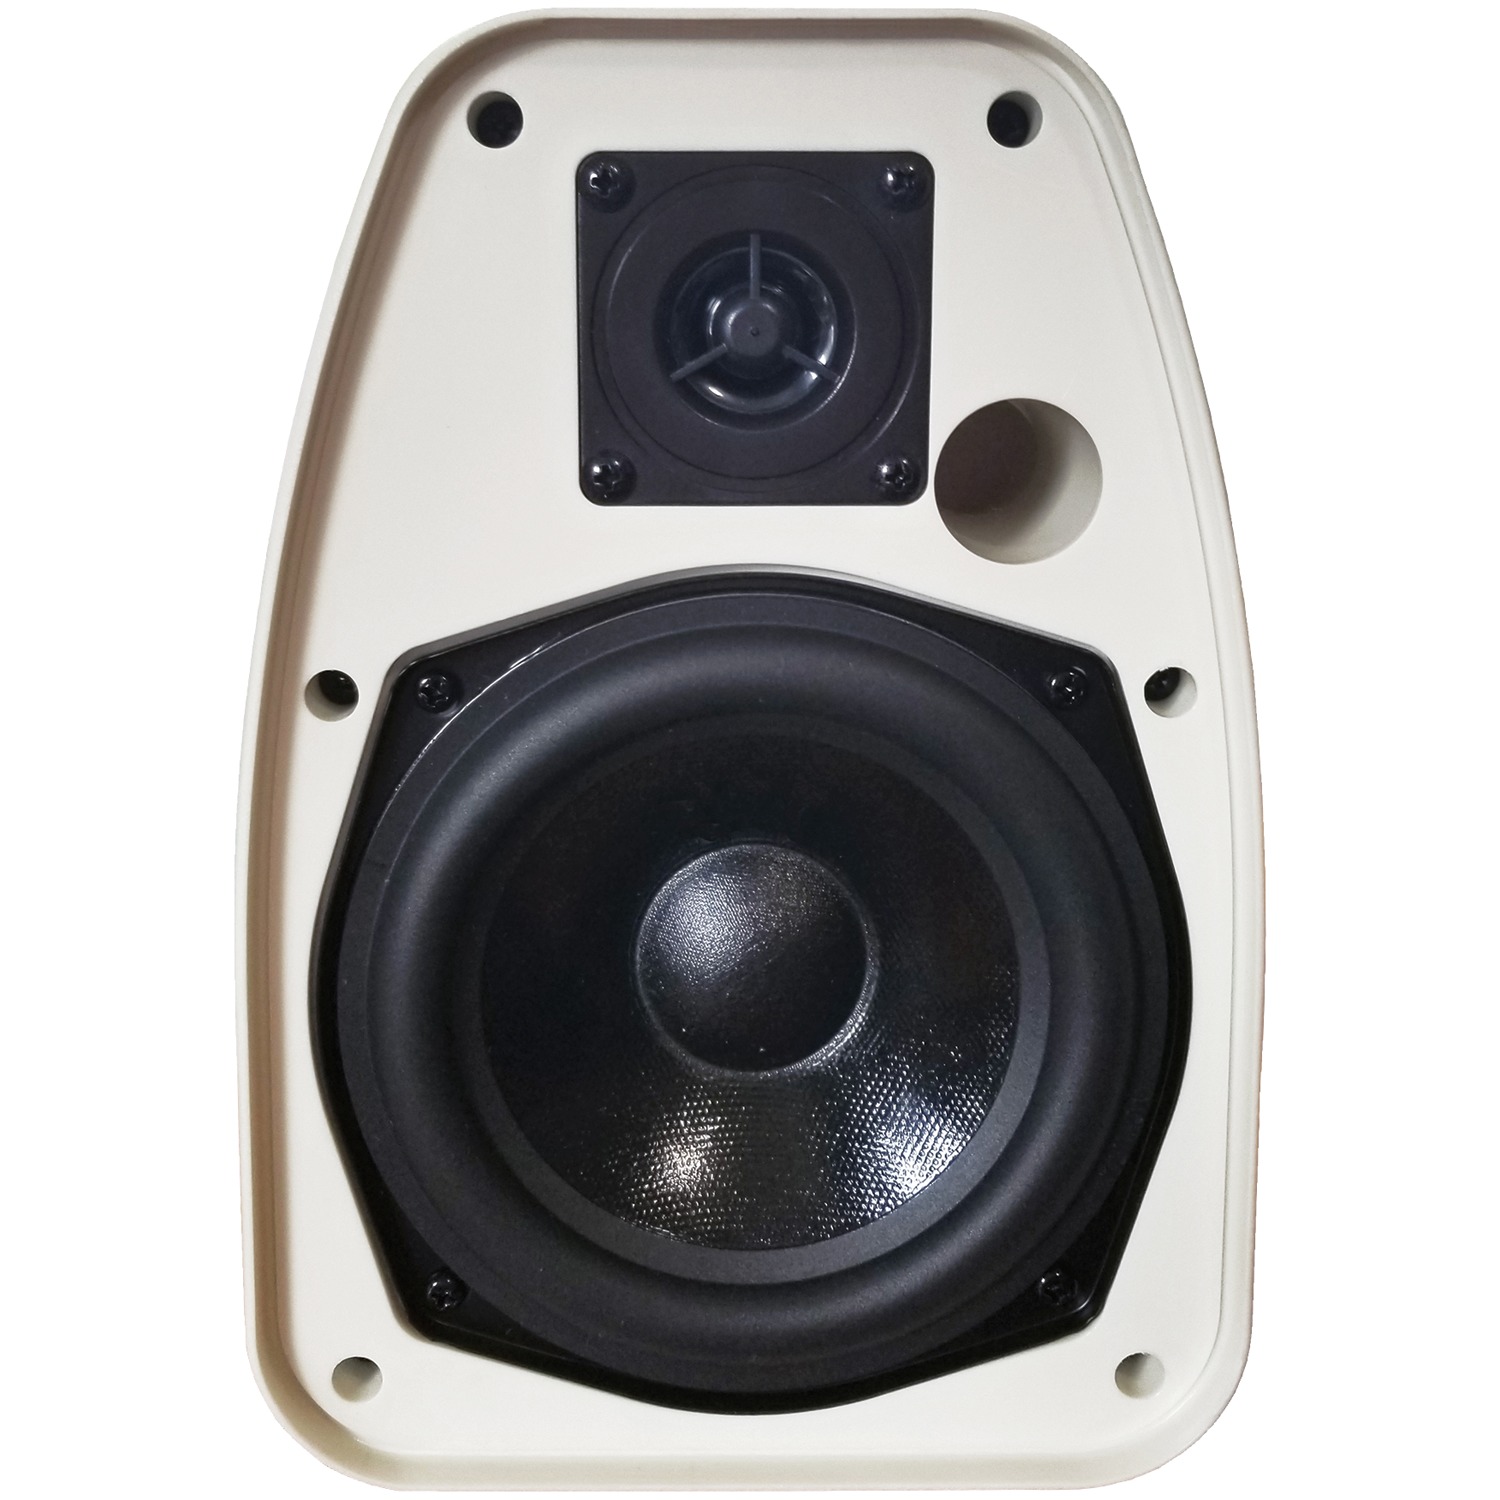 Bic America Adatto DV52SIW 5.25" Adatto Indoor/Outdoor Speakers (White) - image 3 of 6